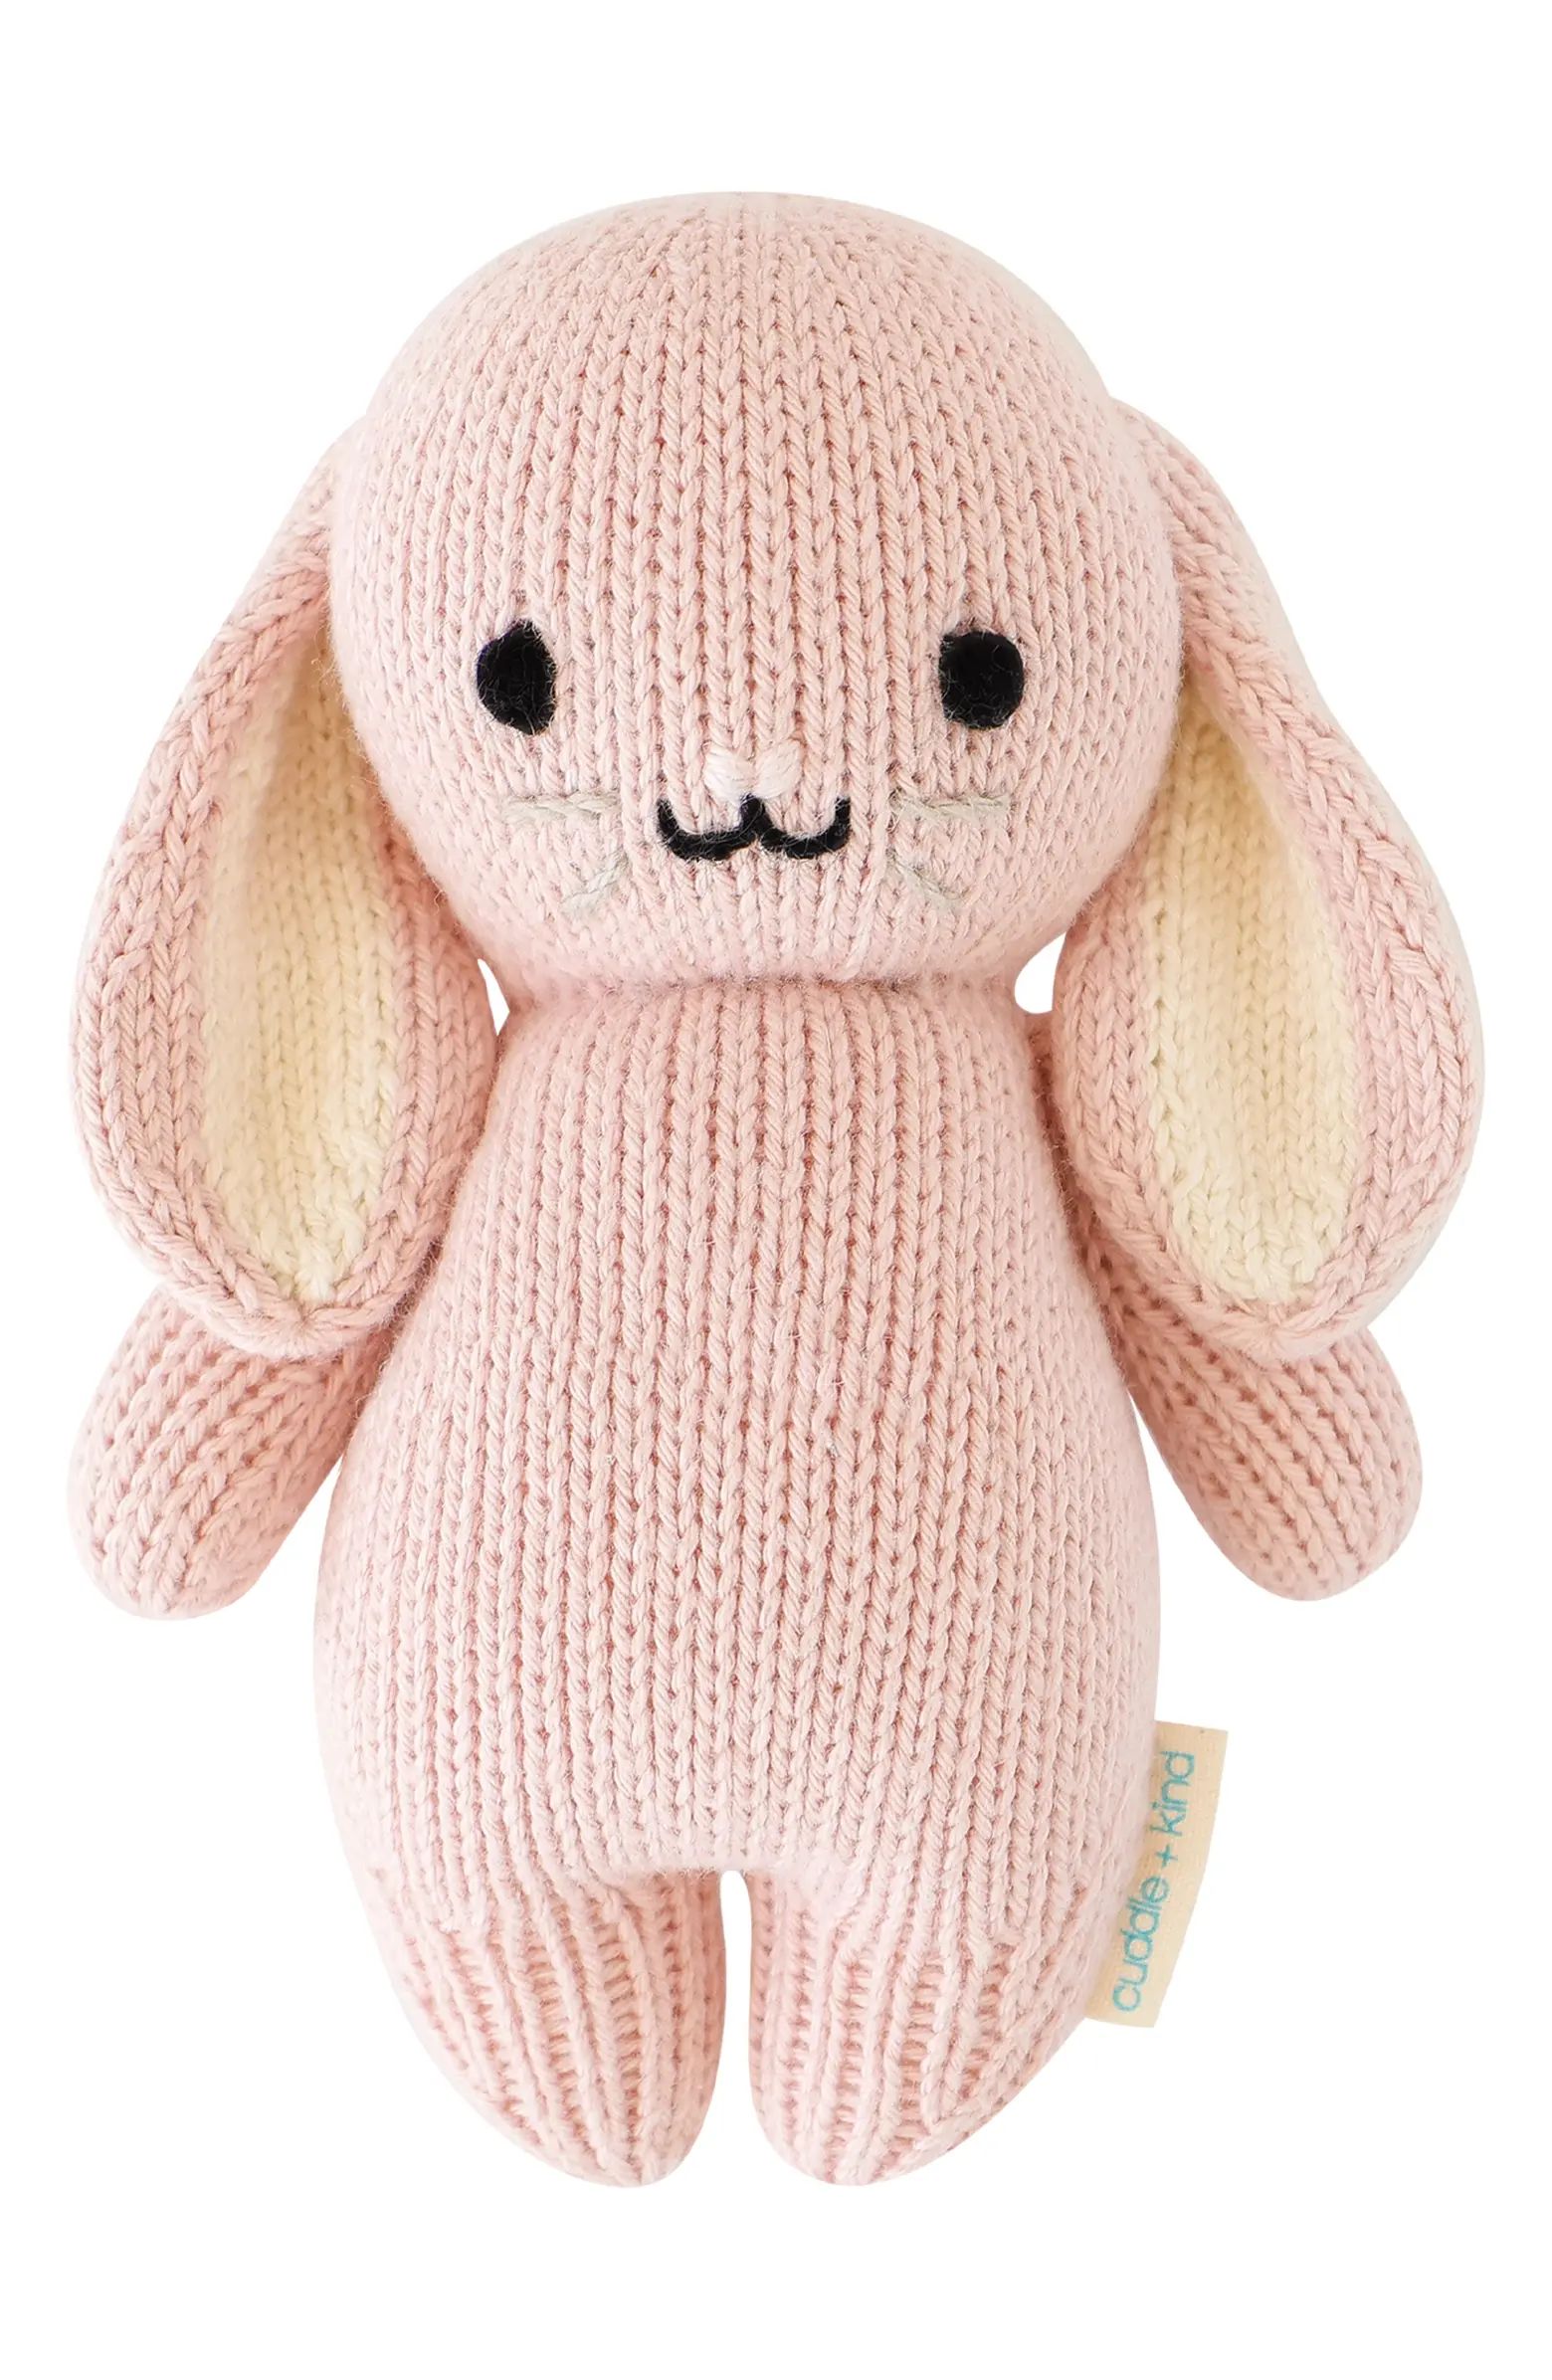 cuddle+kind Baby Bunny Stuffed Animal | Nordstrom | Nordstrom